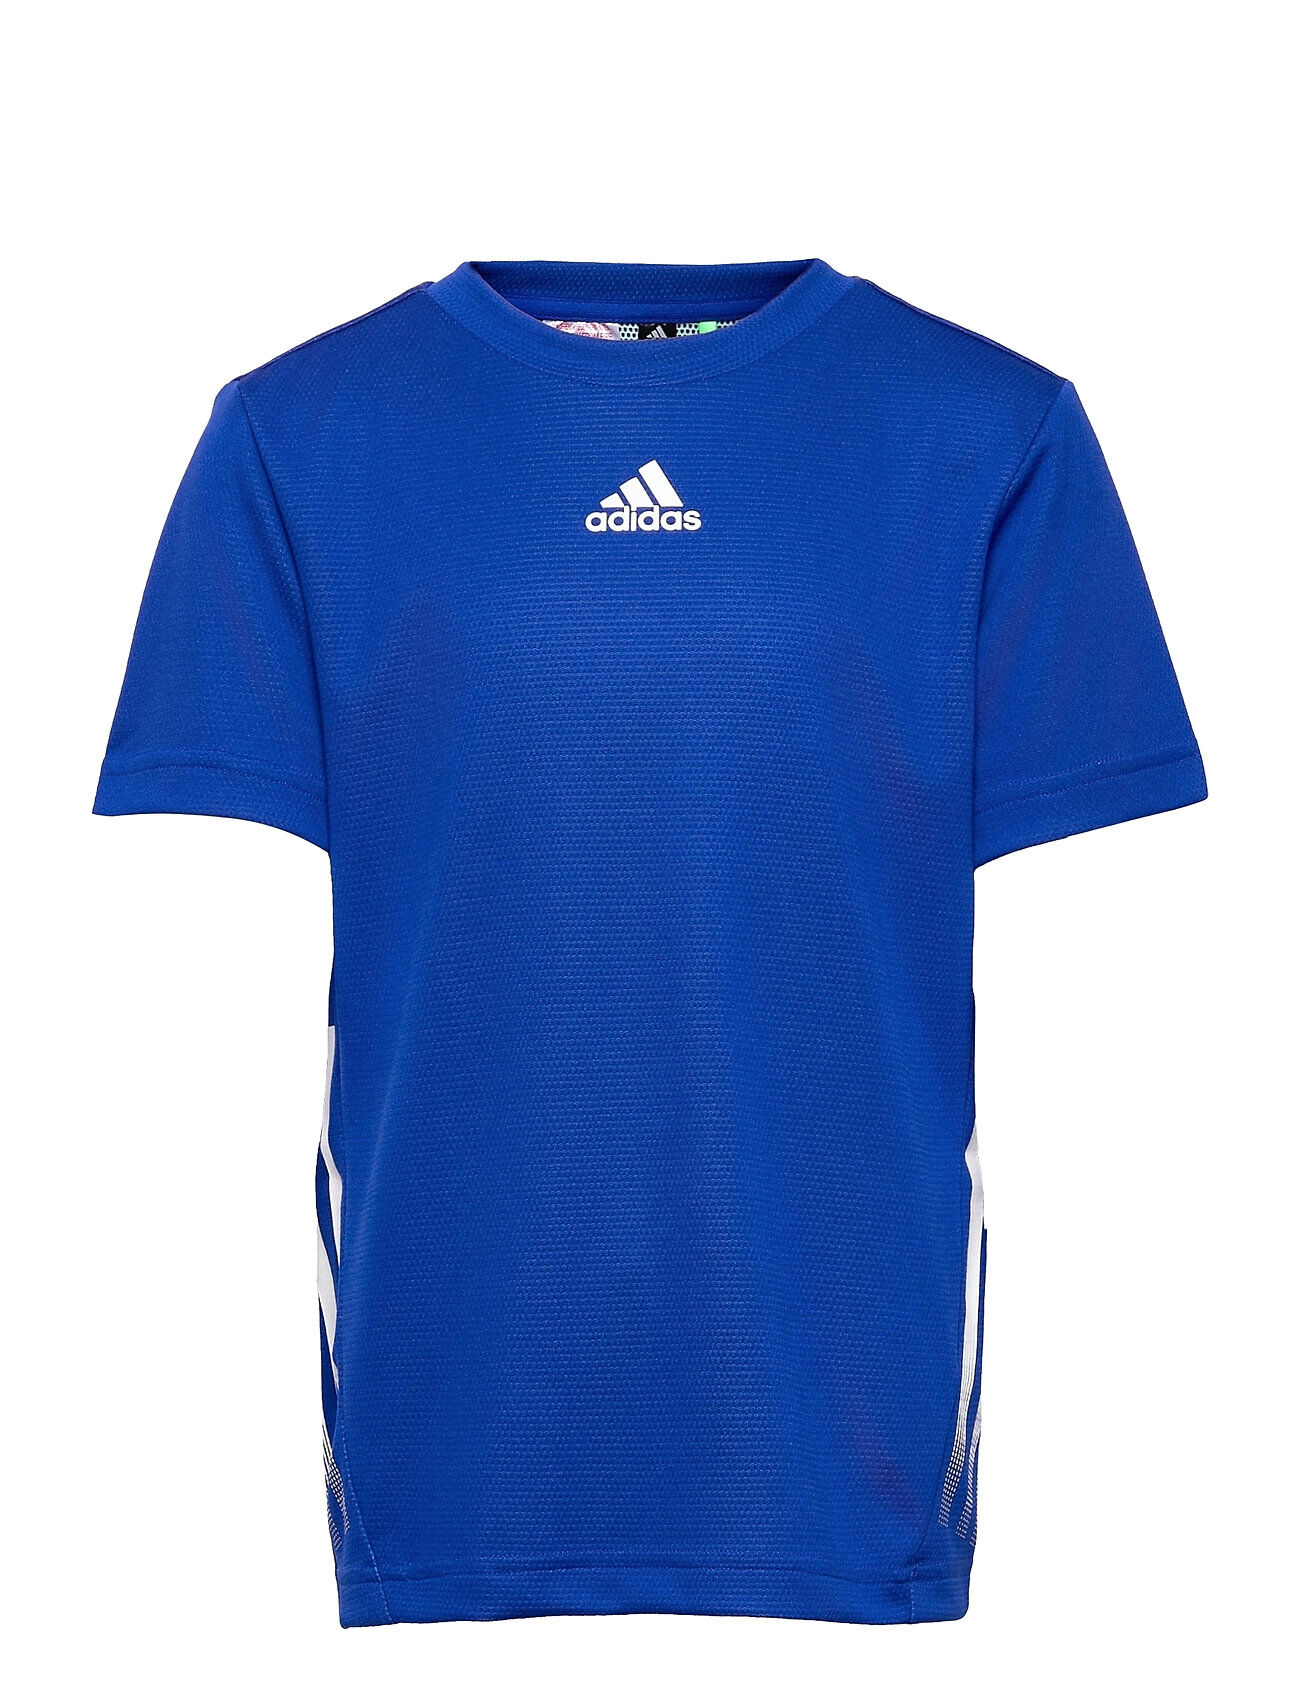 adidas Performance Aeroready Tee T-shirts Short-sleeved Blå Adidas Performance